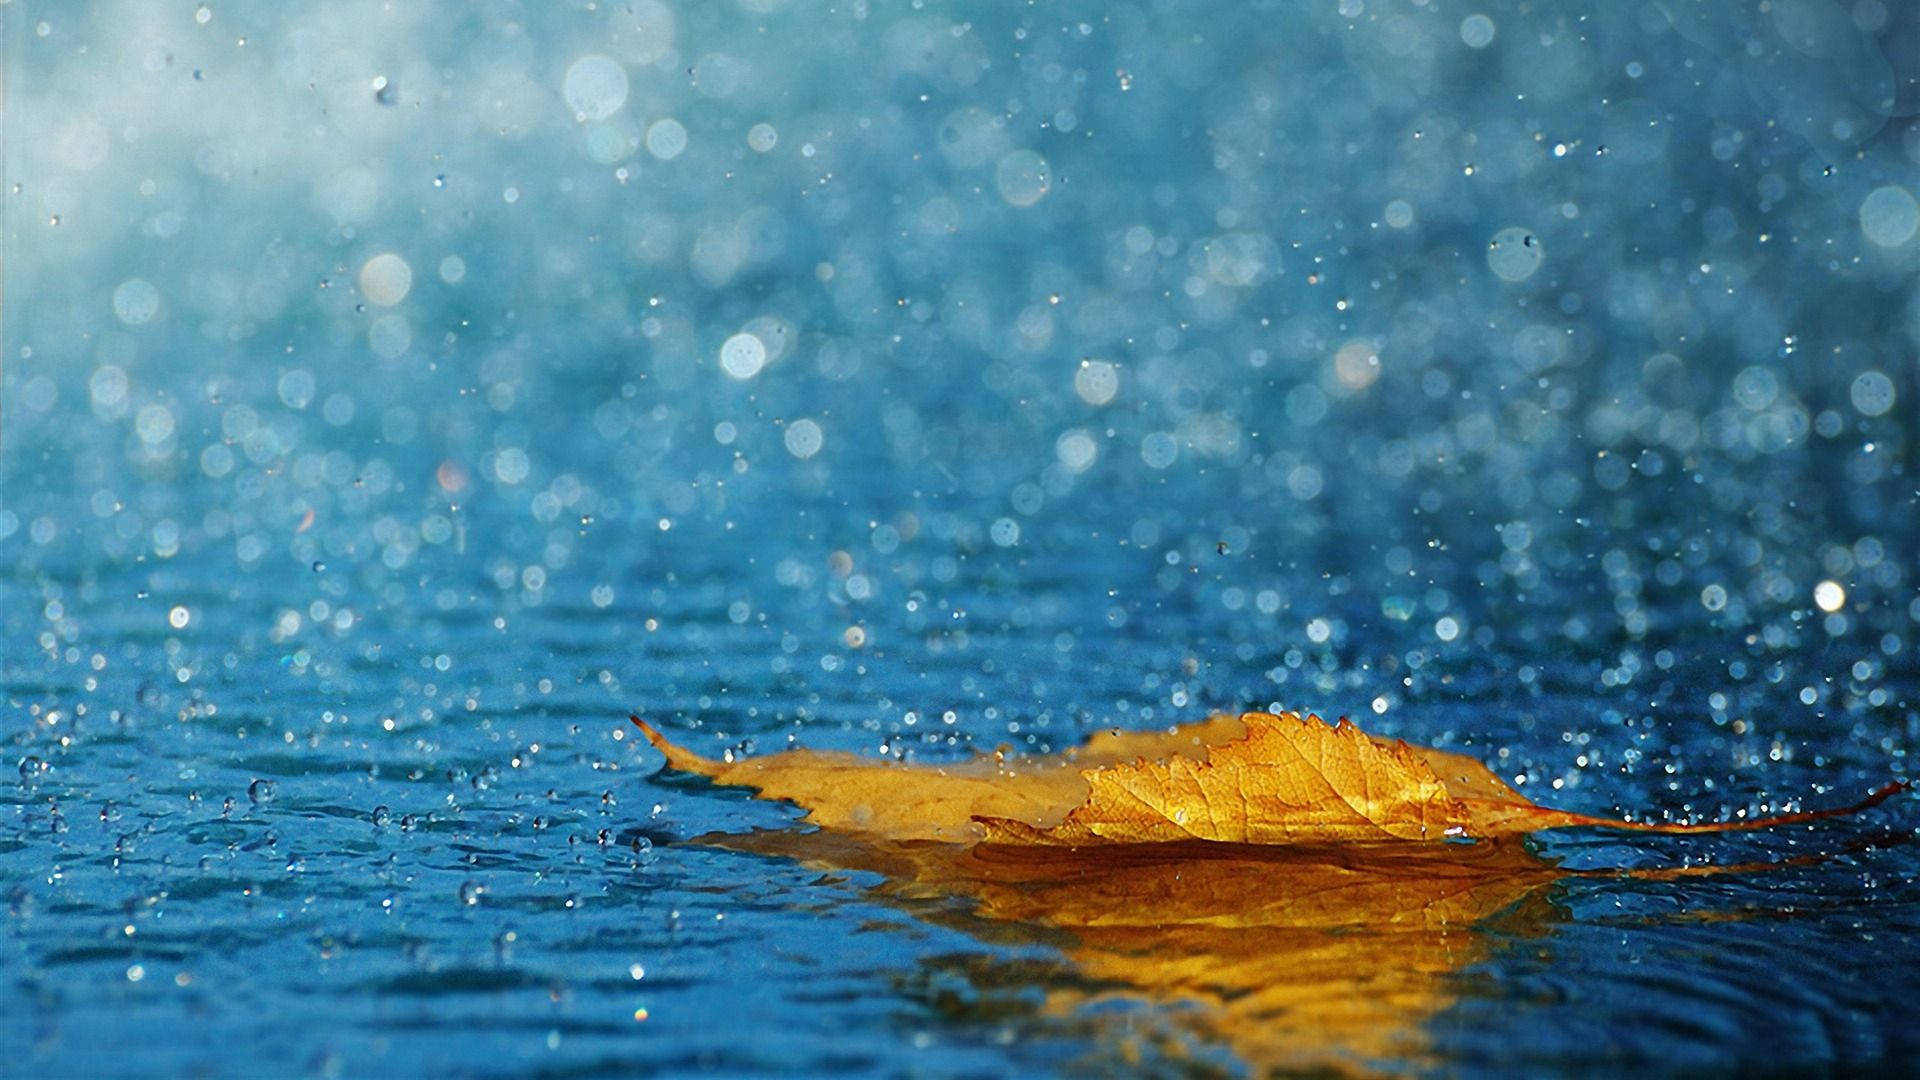 Autumn leave during rainy days desktop wallpaper. 